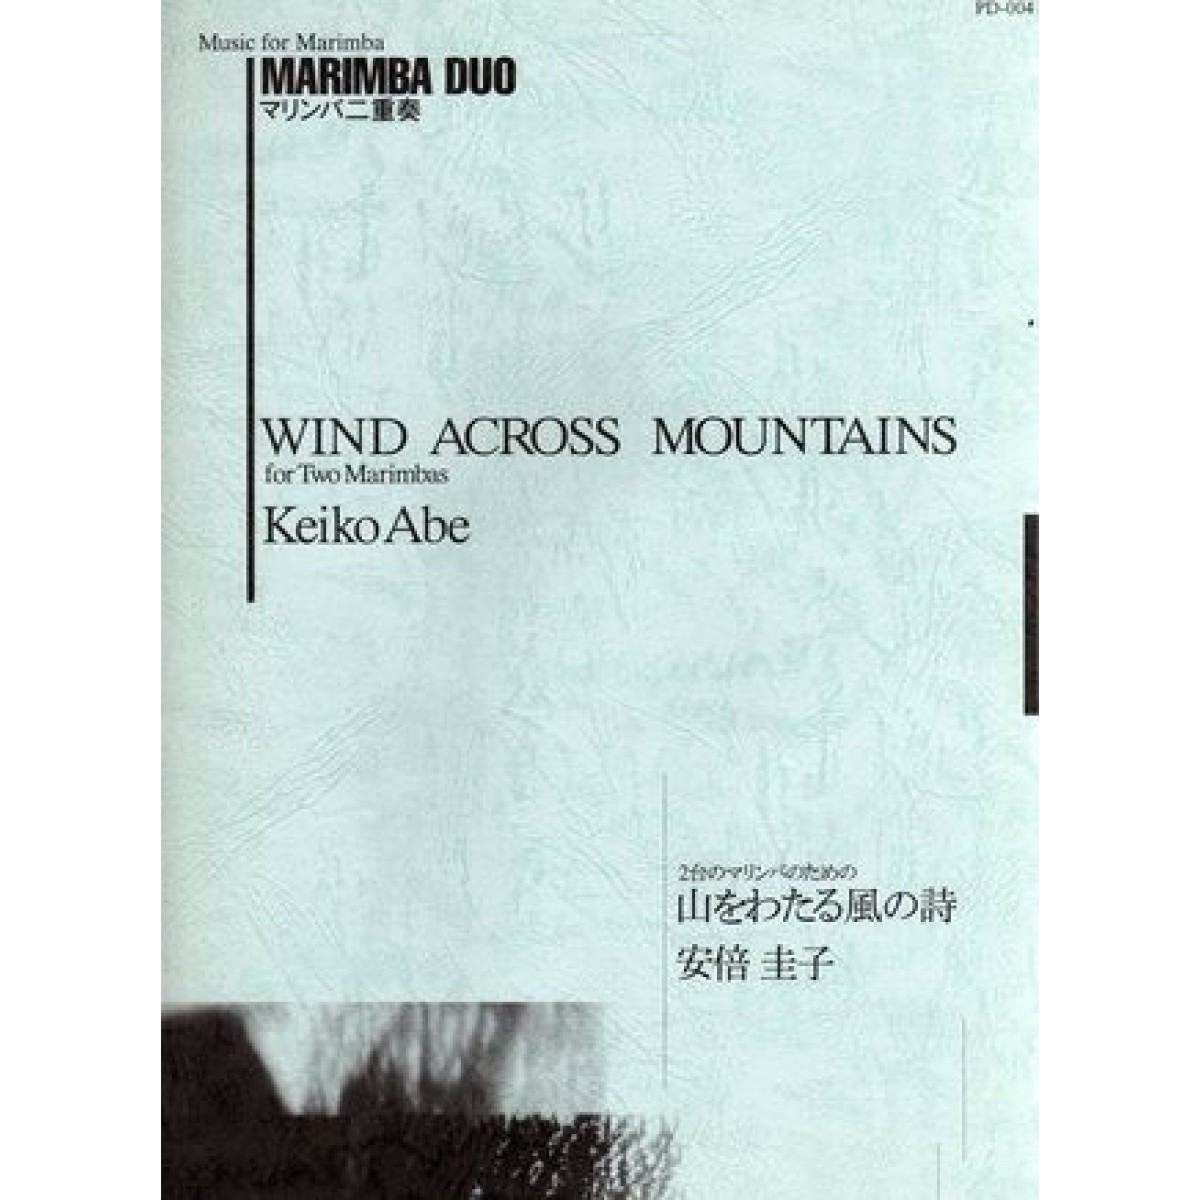 Wind Across Mountains